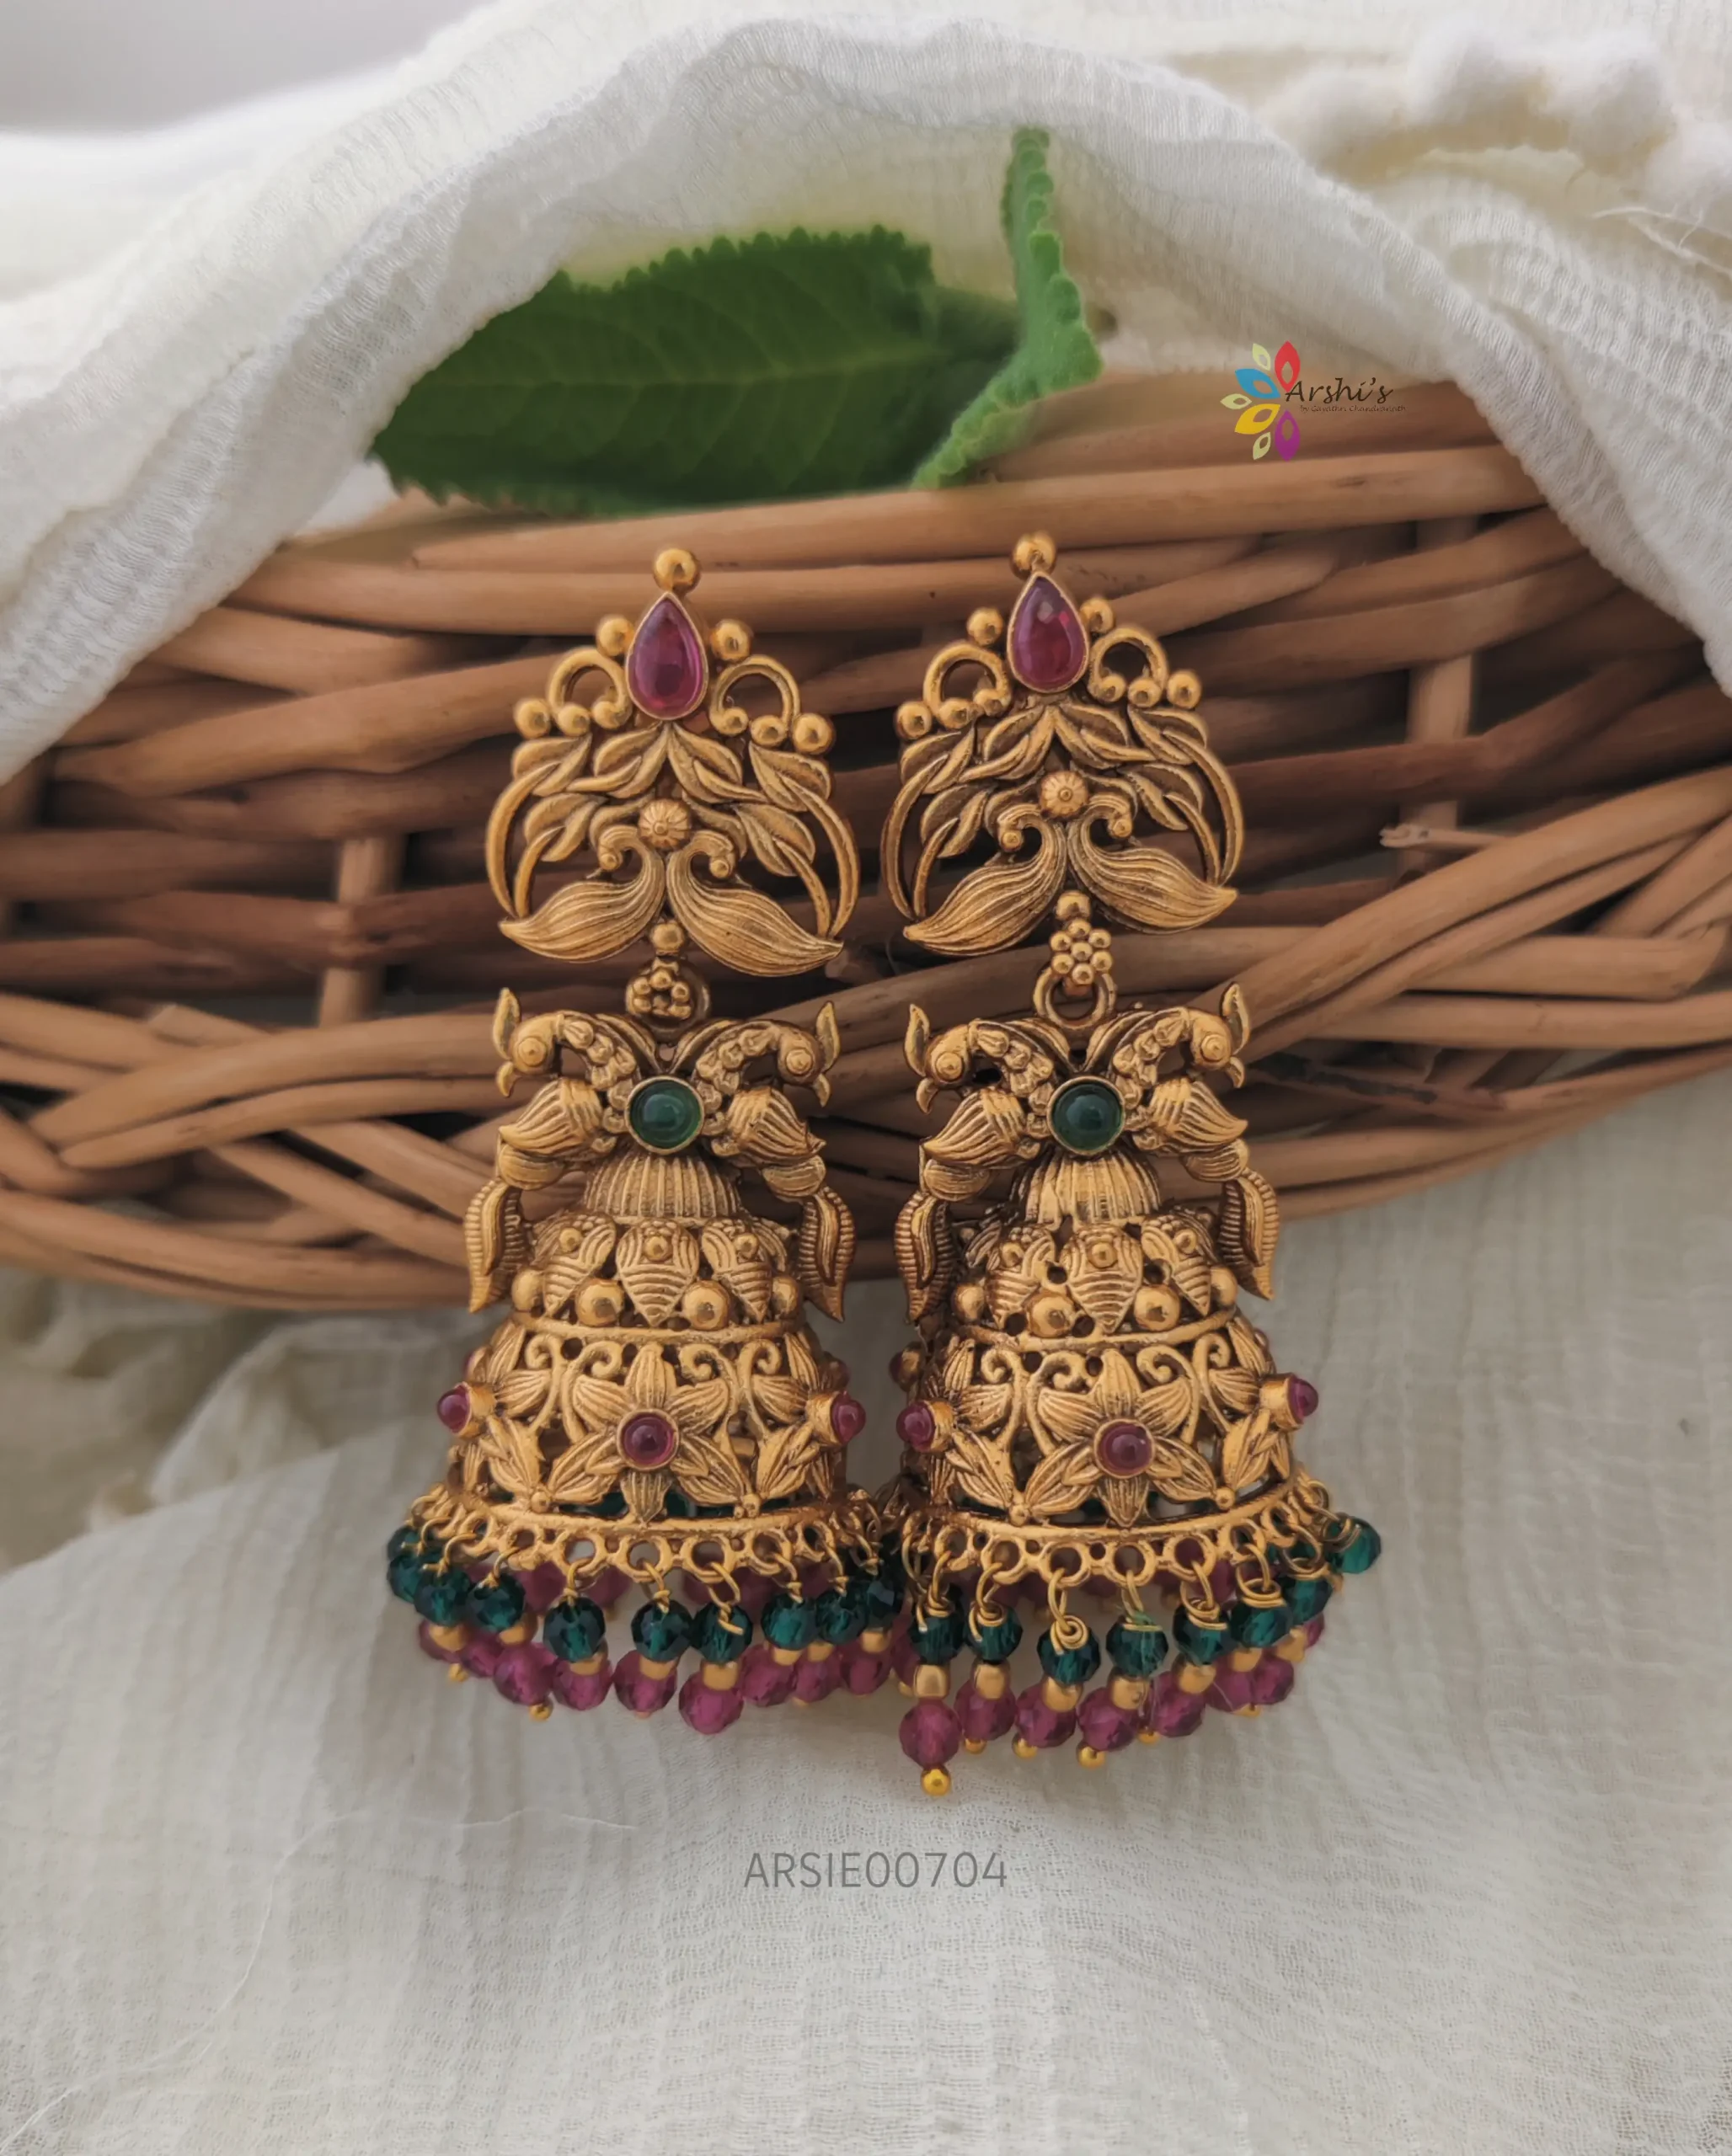 Grand Dual Peacock Earrings